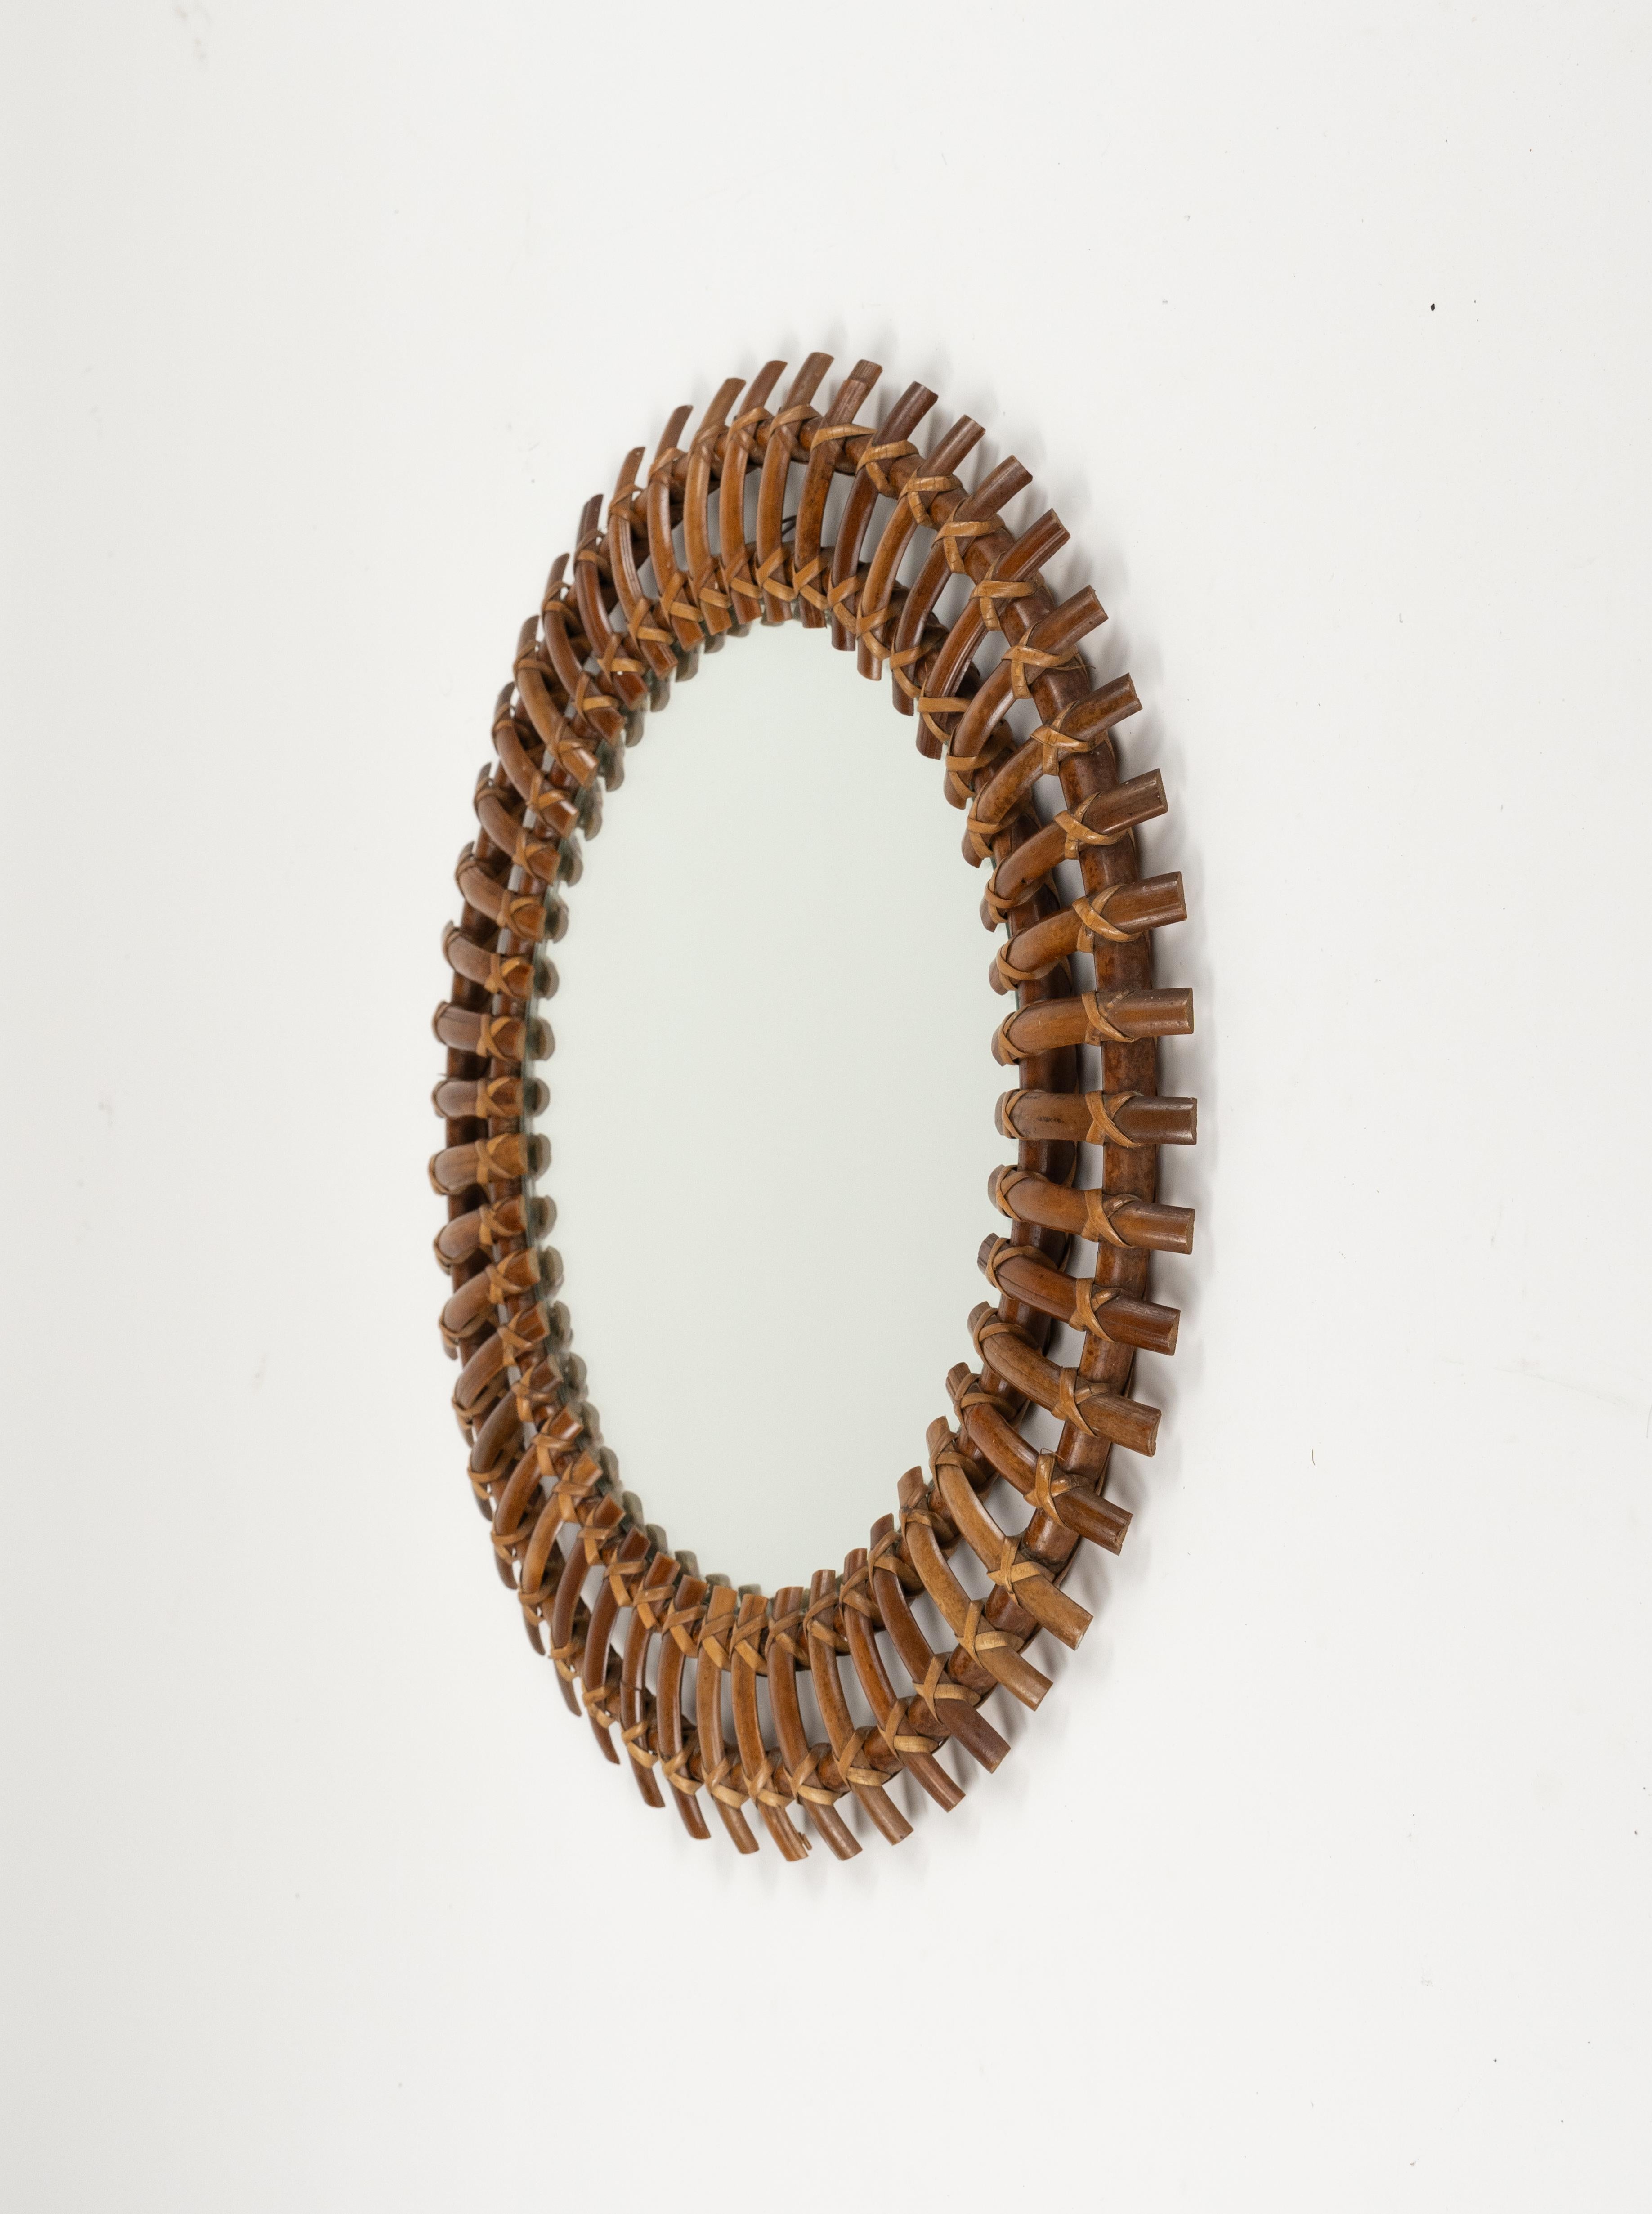 Midcentury Rattan & Bamboo Sunburst Round Wall Mirror, Italy, 1960s For Sale 5